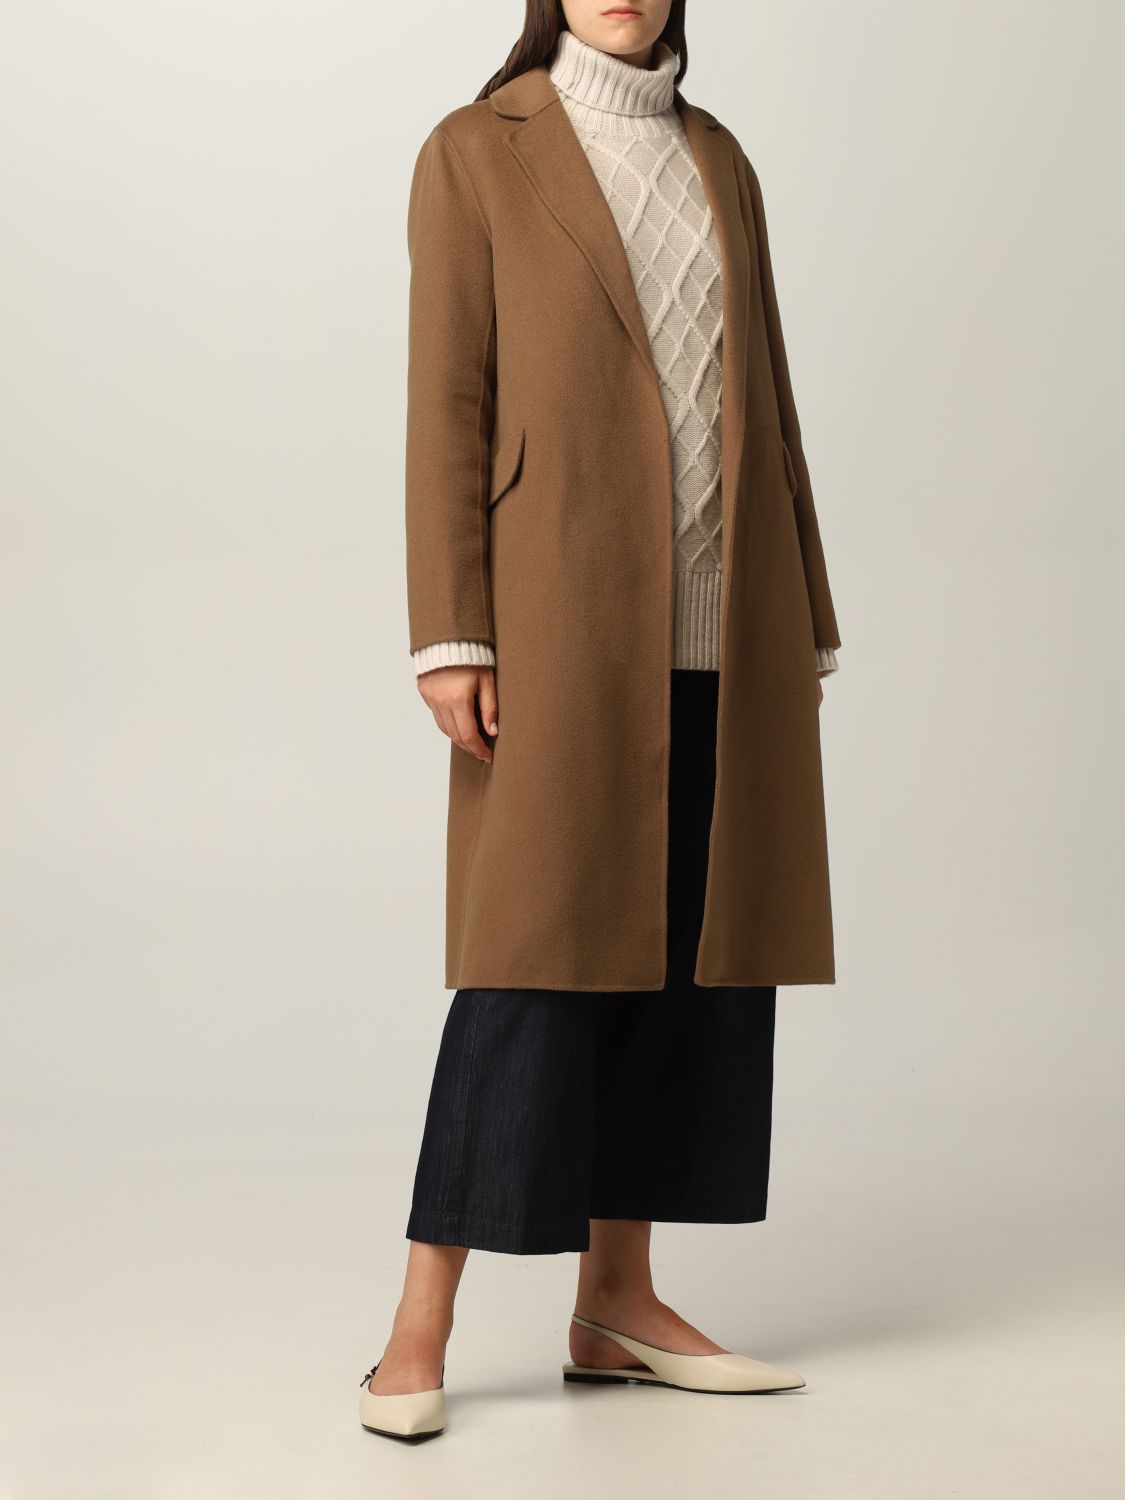 S MAX MARA: wool wrap coat | Coat S Max Mara Women Blush Pink | Coat S ...